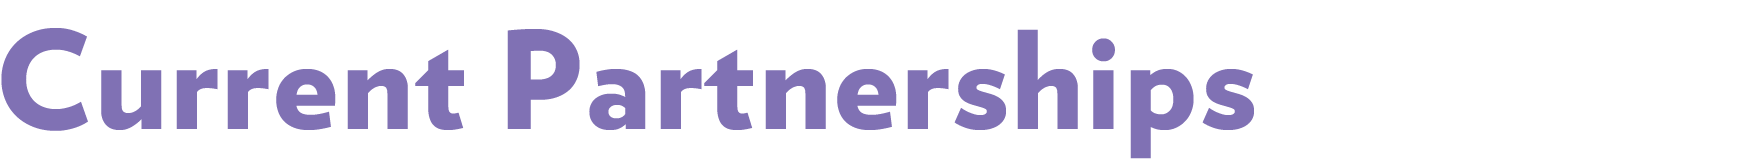 Current-Partnerships-purple